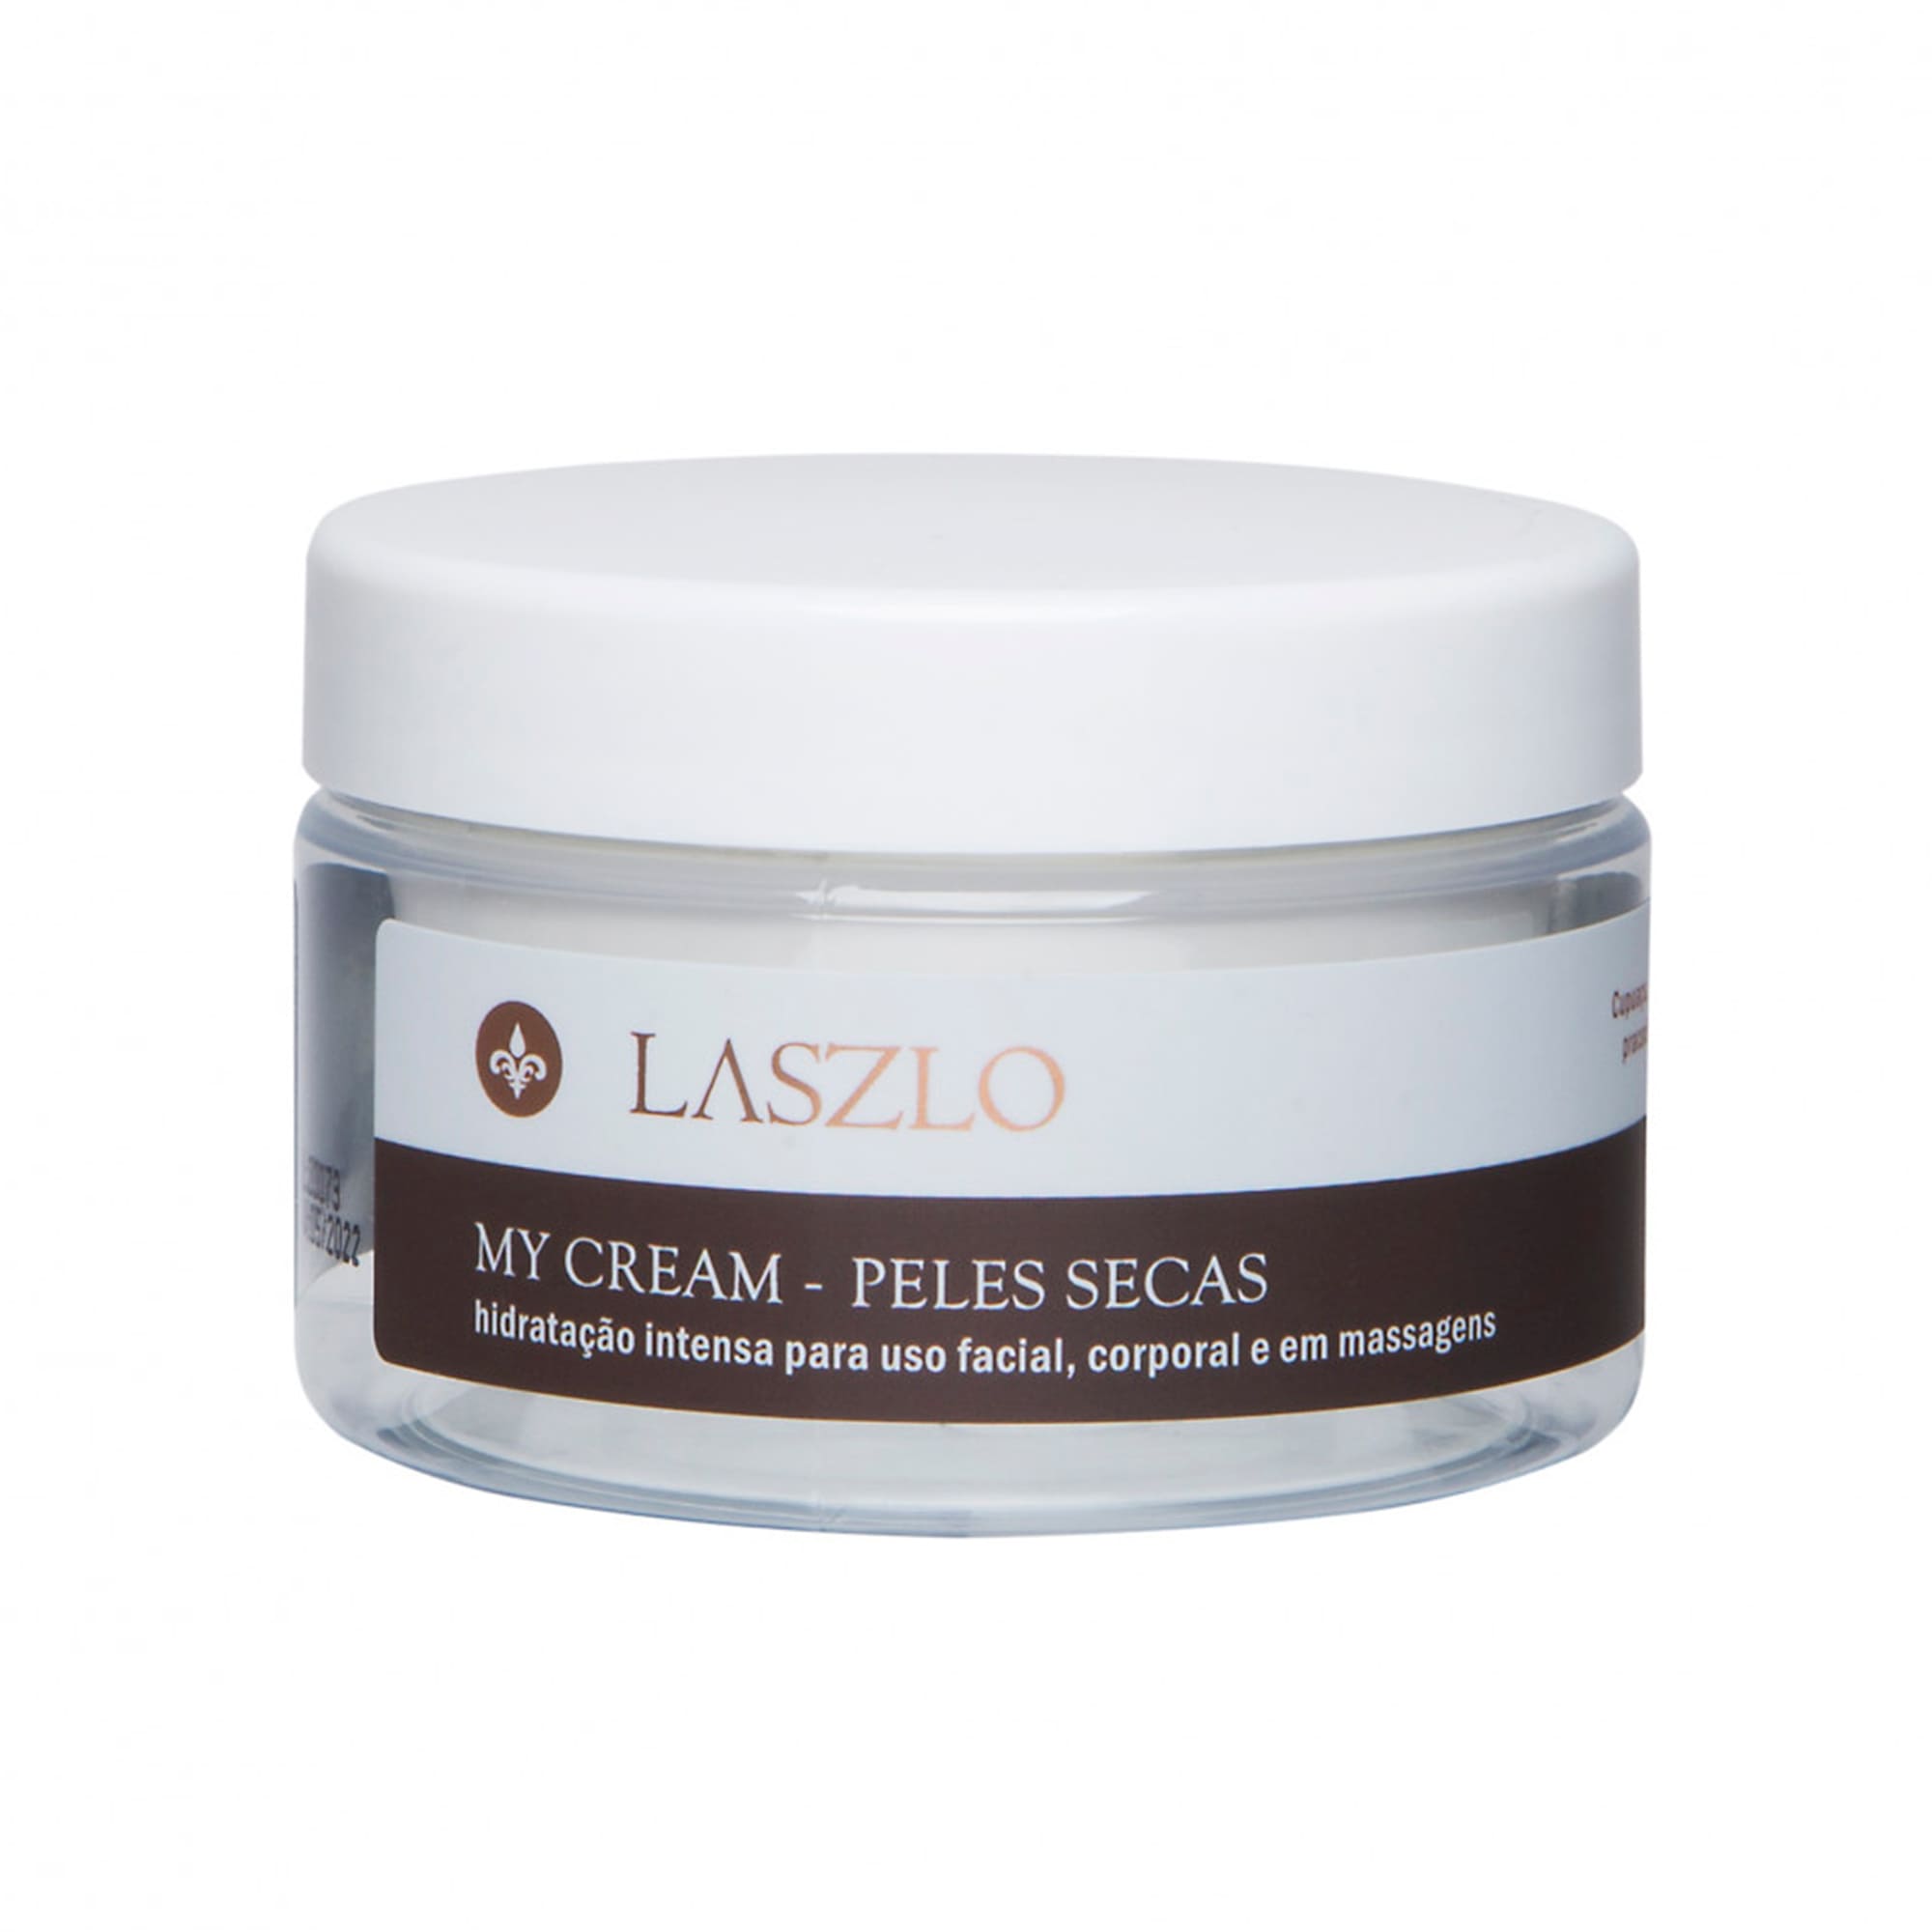 Creme Base My Cream - Peles Secas 200g - Laszlo